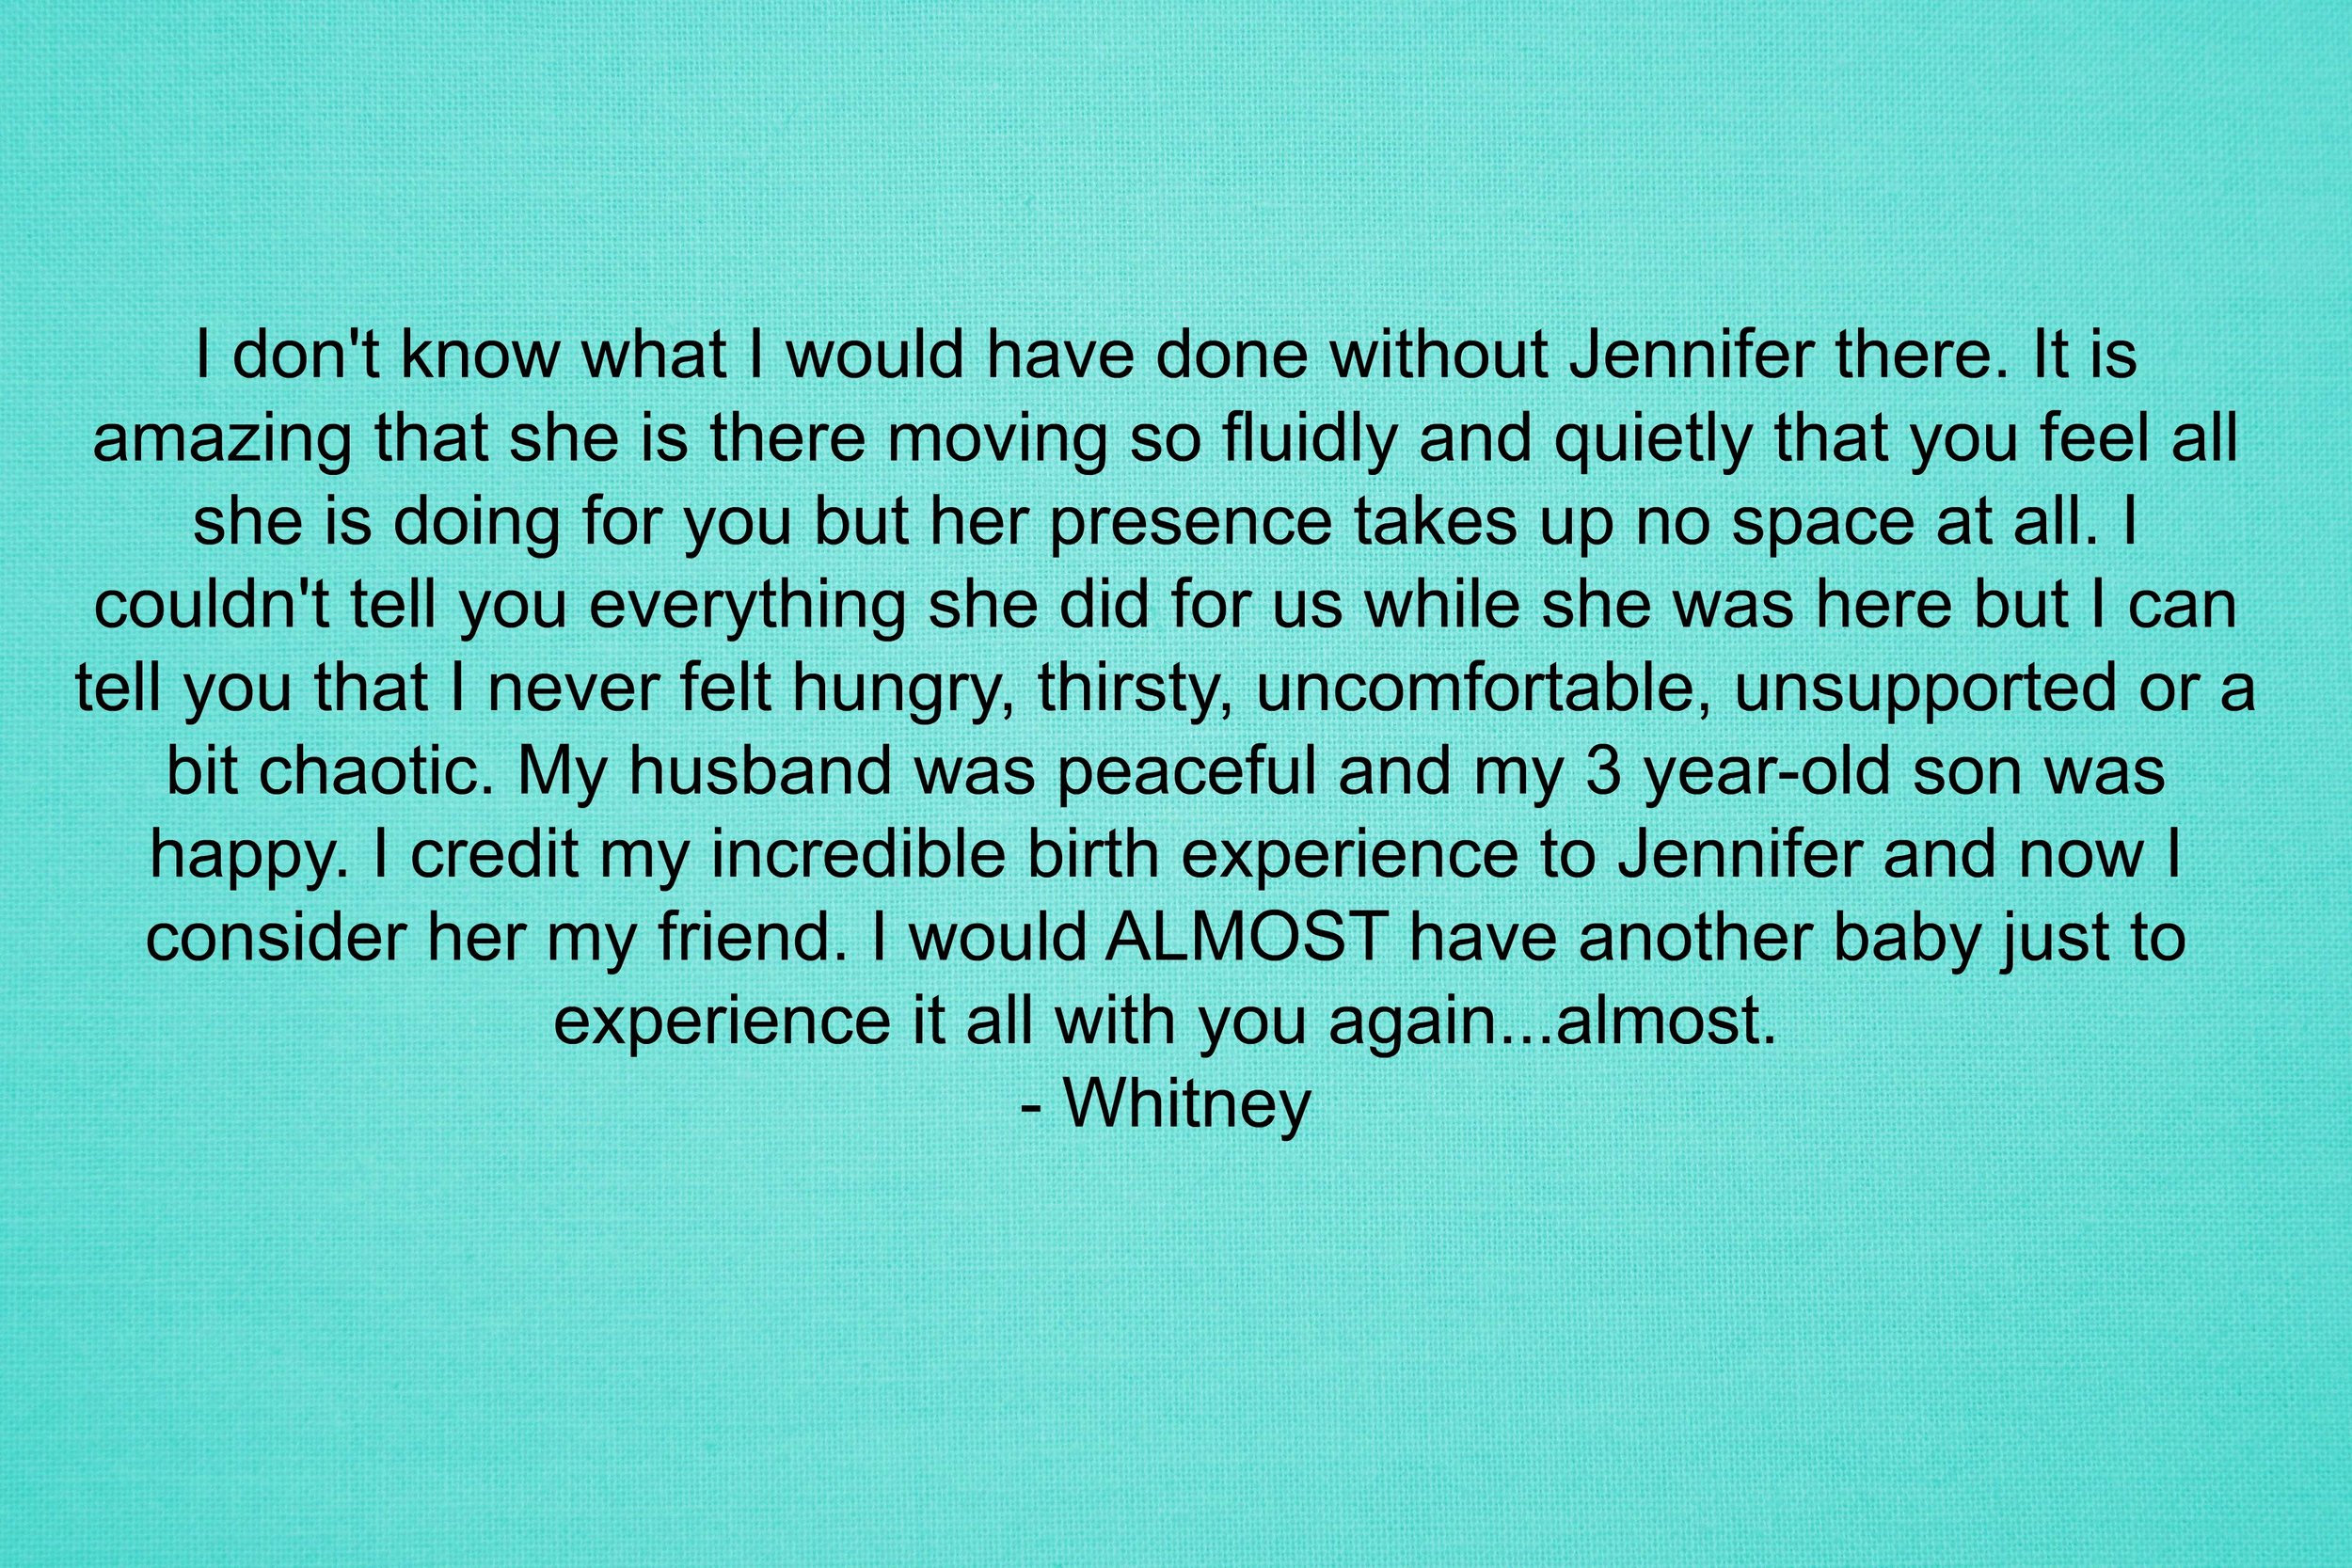 Whitney testimonial.jpg